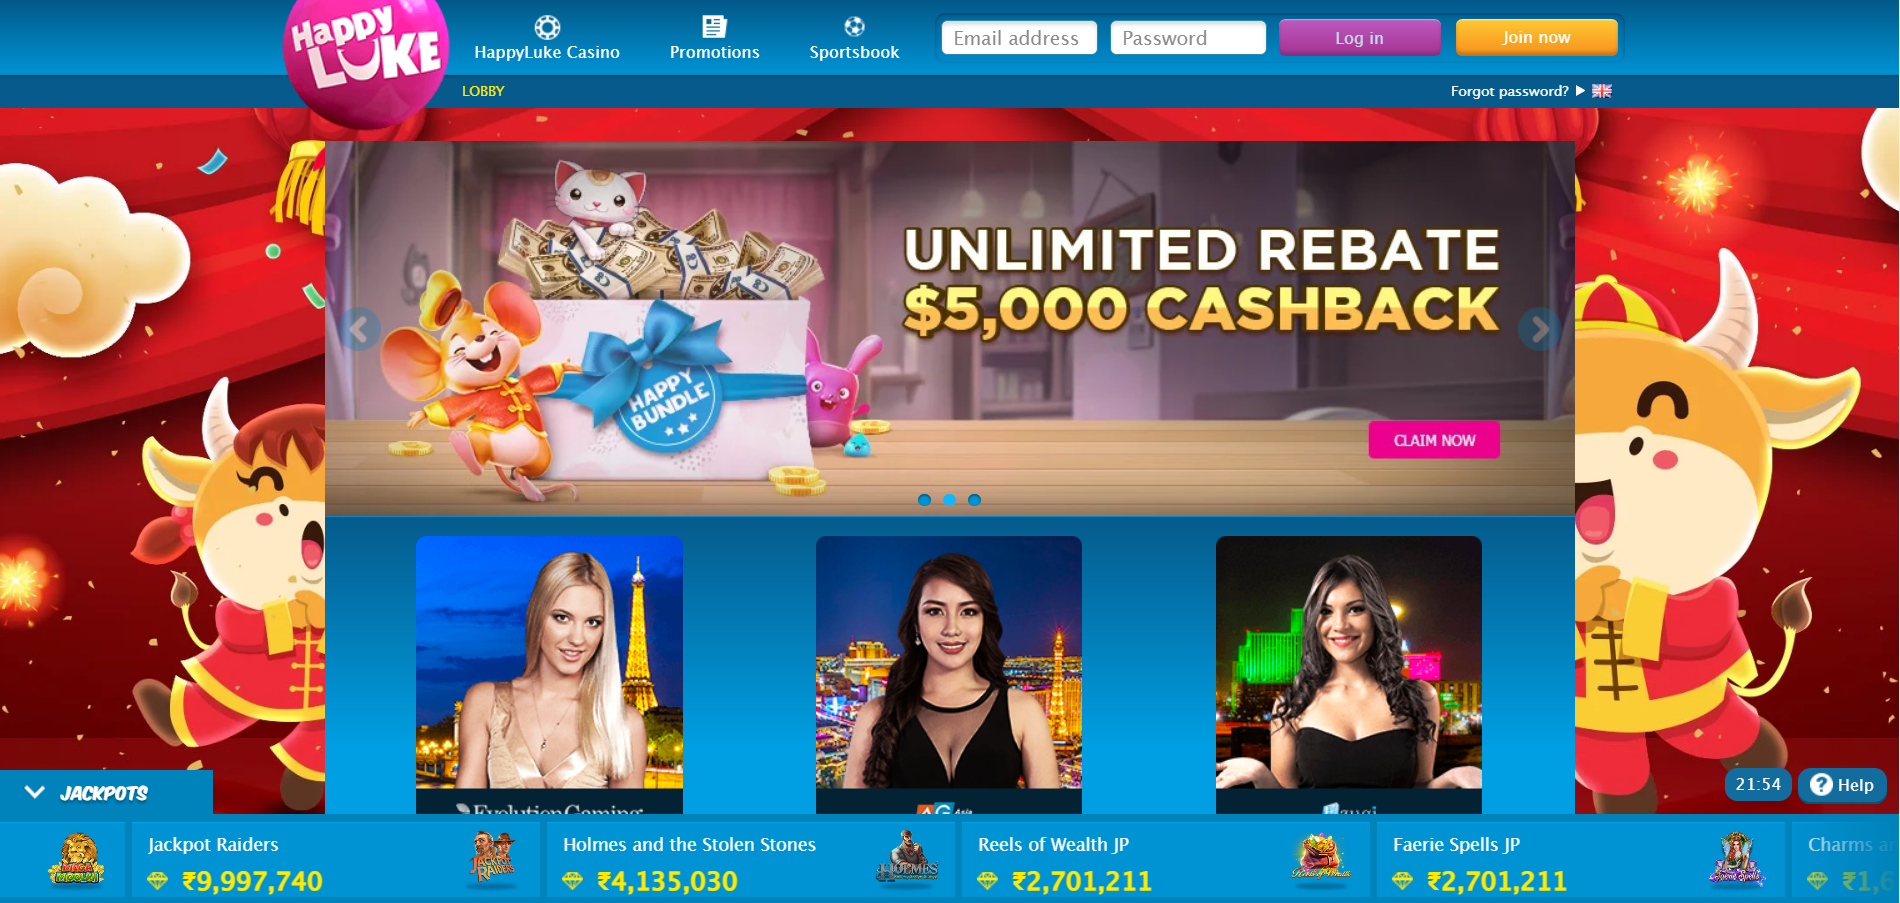 HappyLuke Casino Live Dealer Games